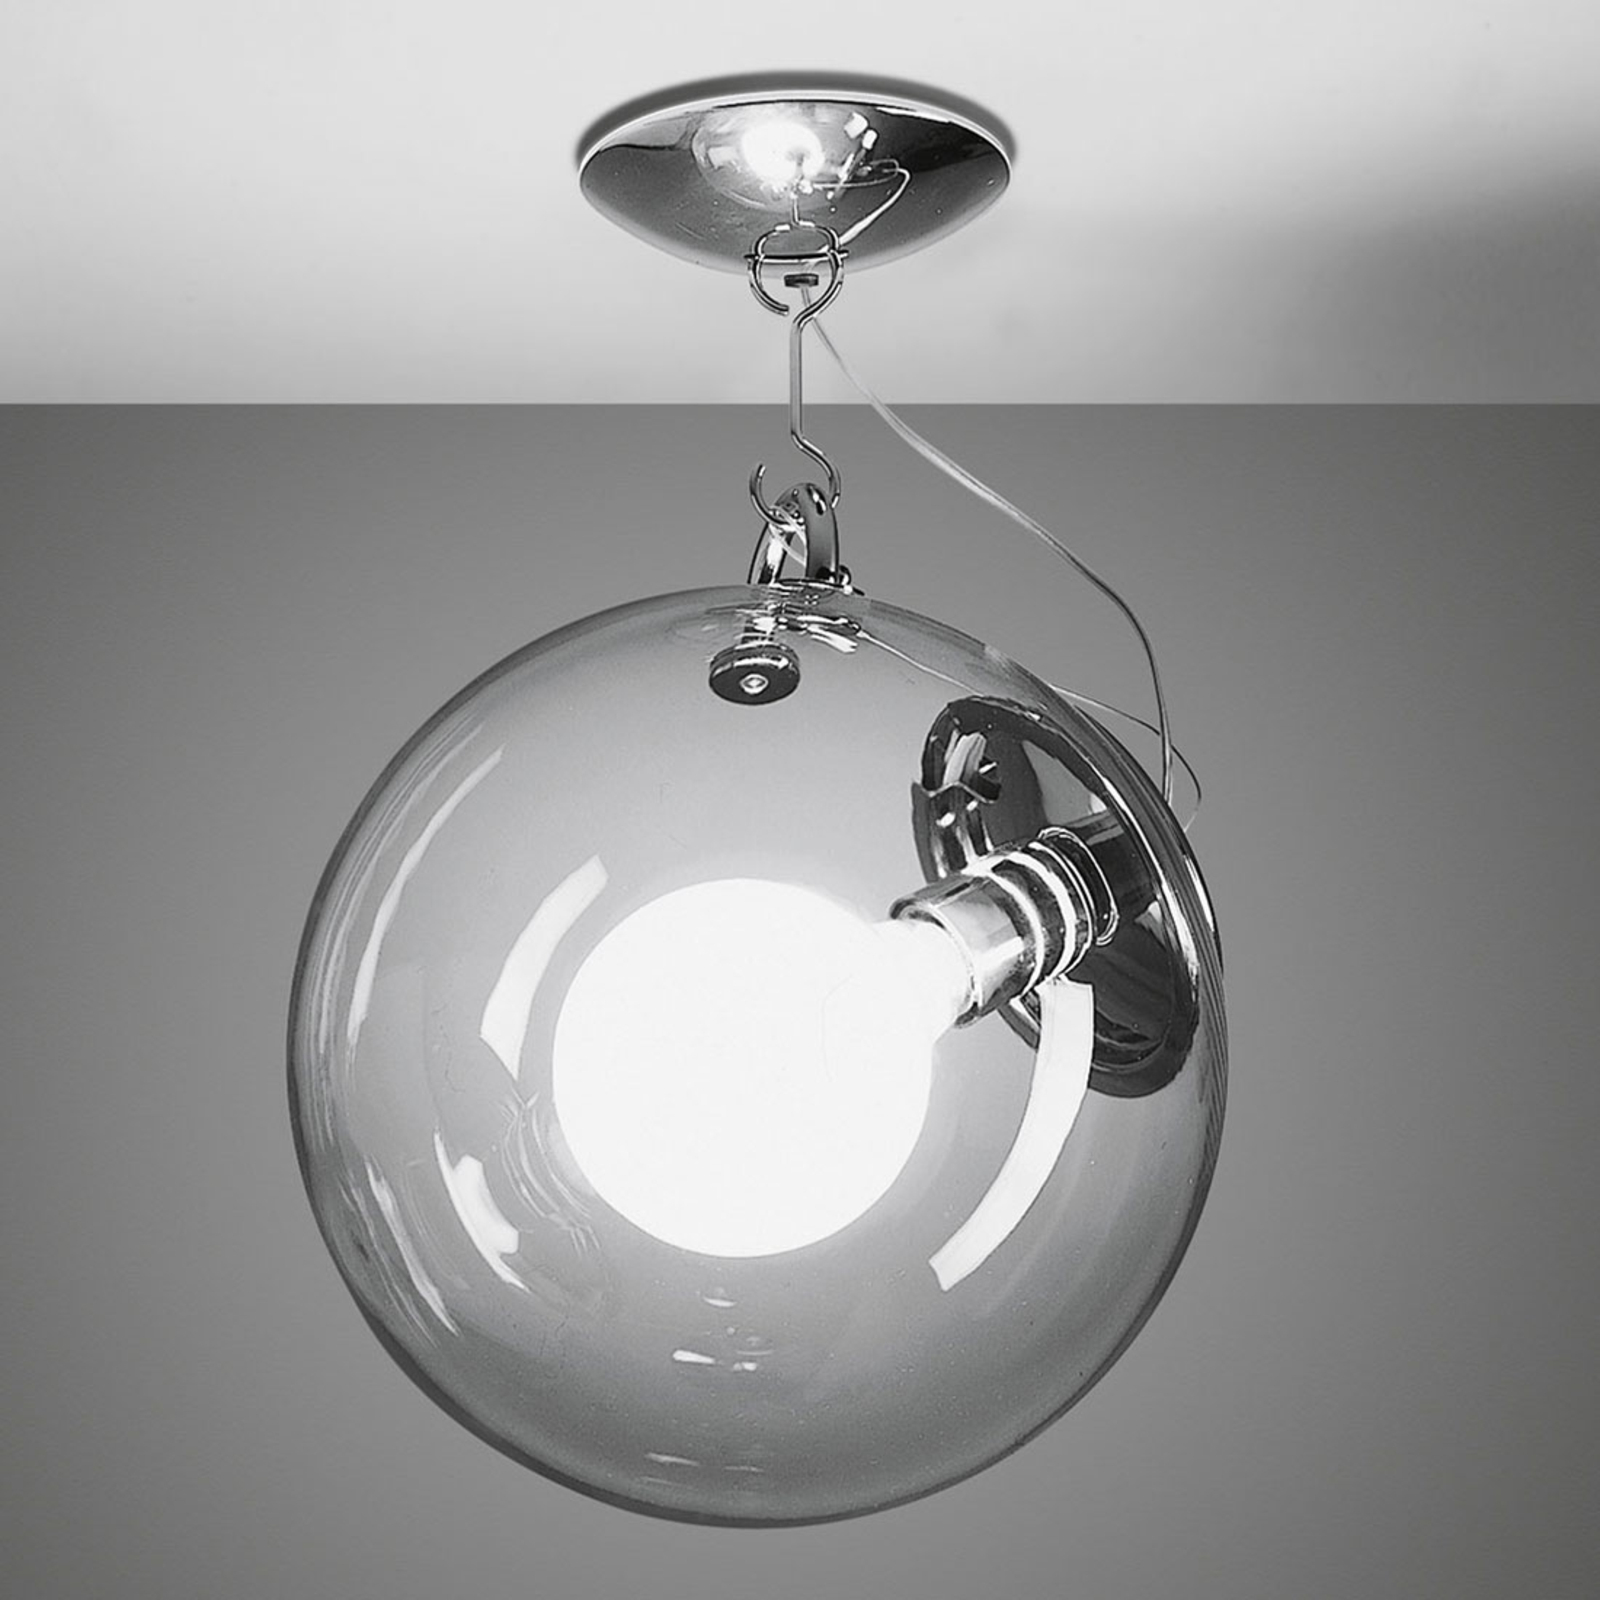 Artemide Miconos glass ceiling light in chrome